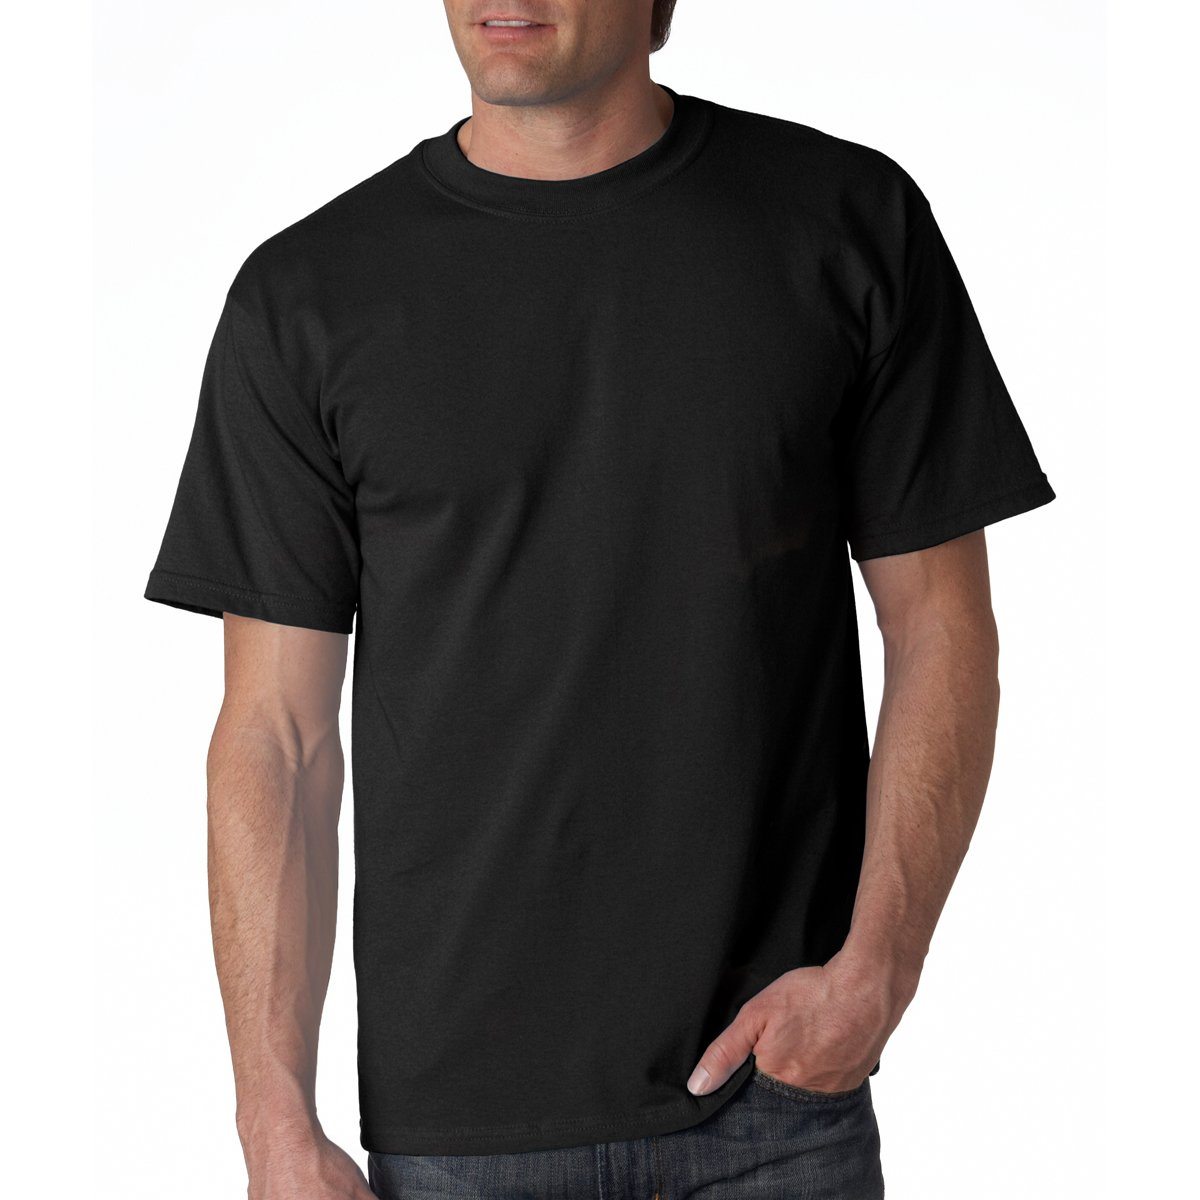 Gildan® Adult Ultra Cotton® T-Shirt Black Multi Color S-XL